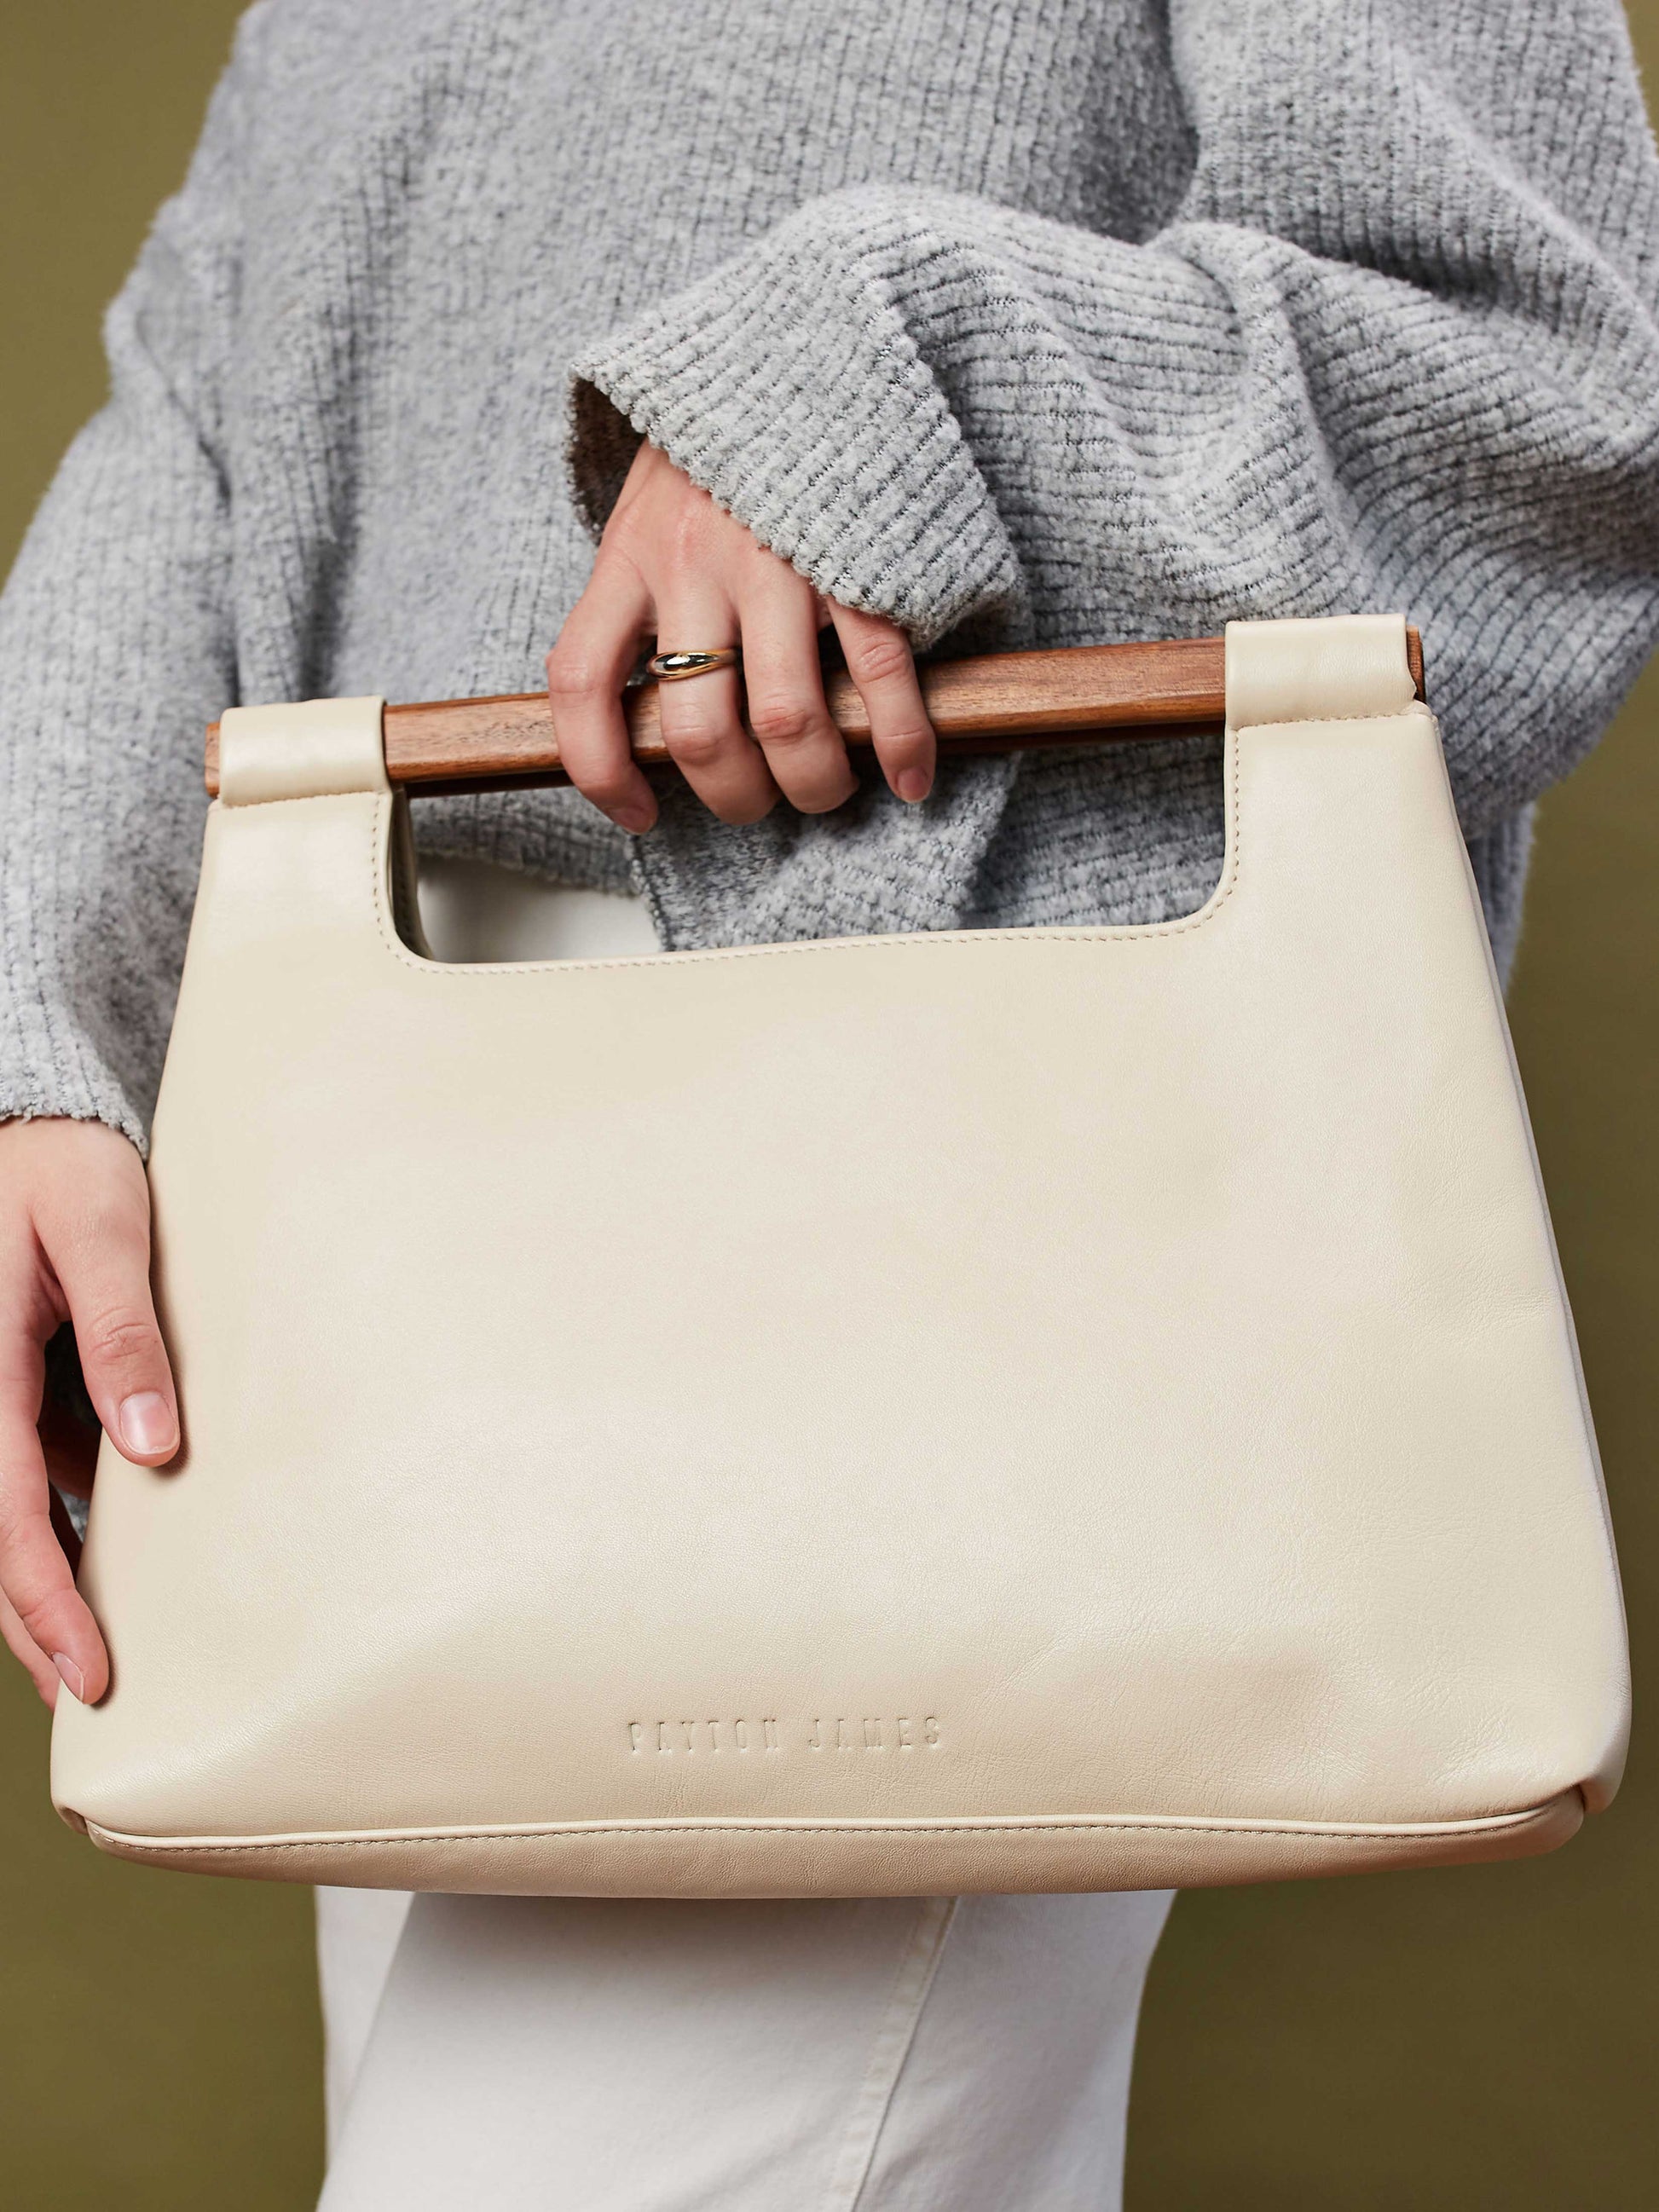 Italian Leather Tote Handbag- White Wood cut out Tote Handbag by Payton James